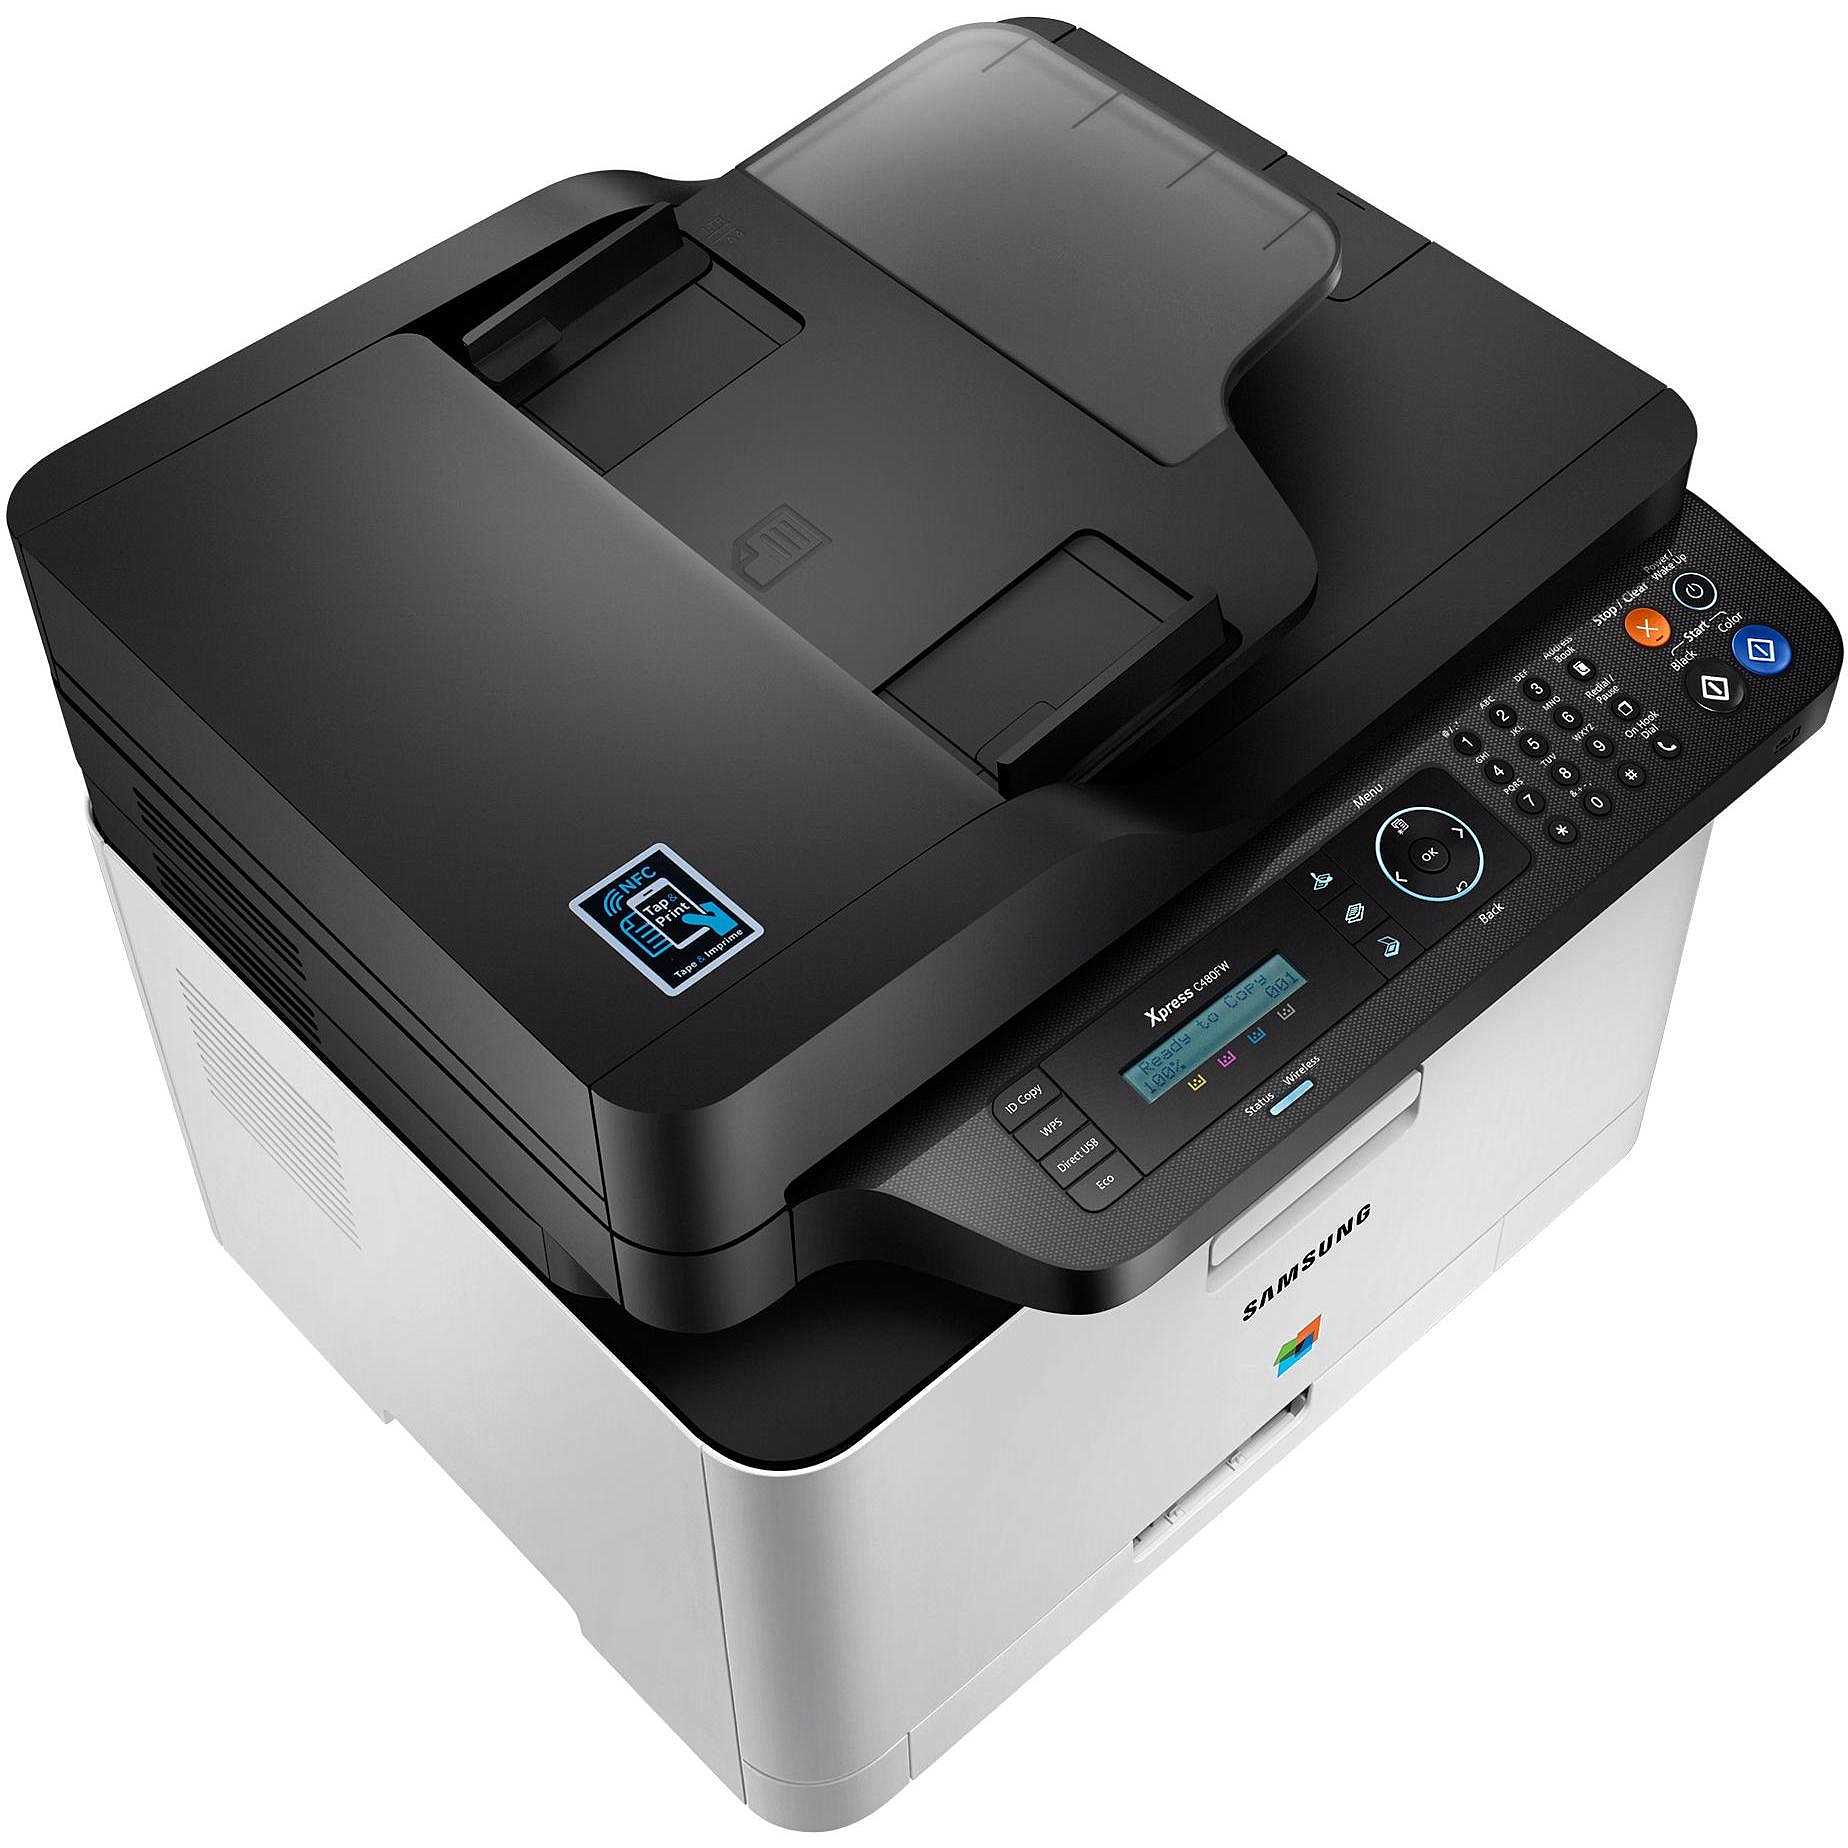 Samsung SL-C480FW Xpress stampante laser multifunzione a colori Wifi -  Stampanti e scanner multifunzioni Laser - ClickForShop